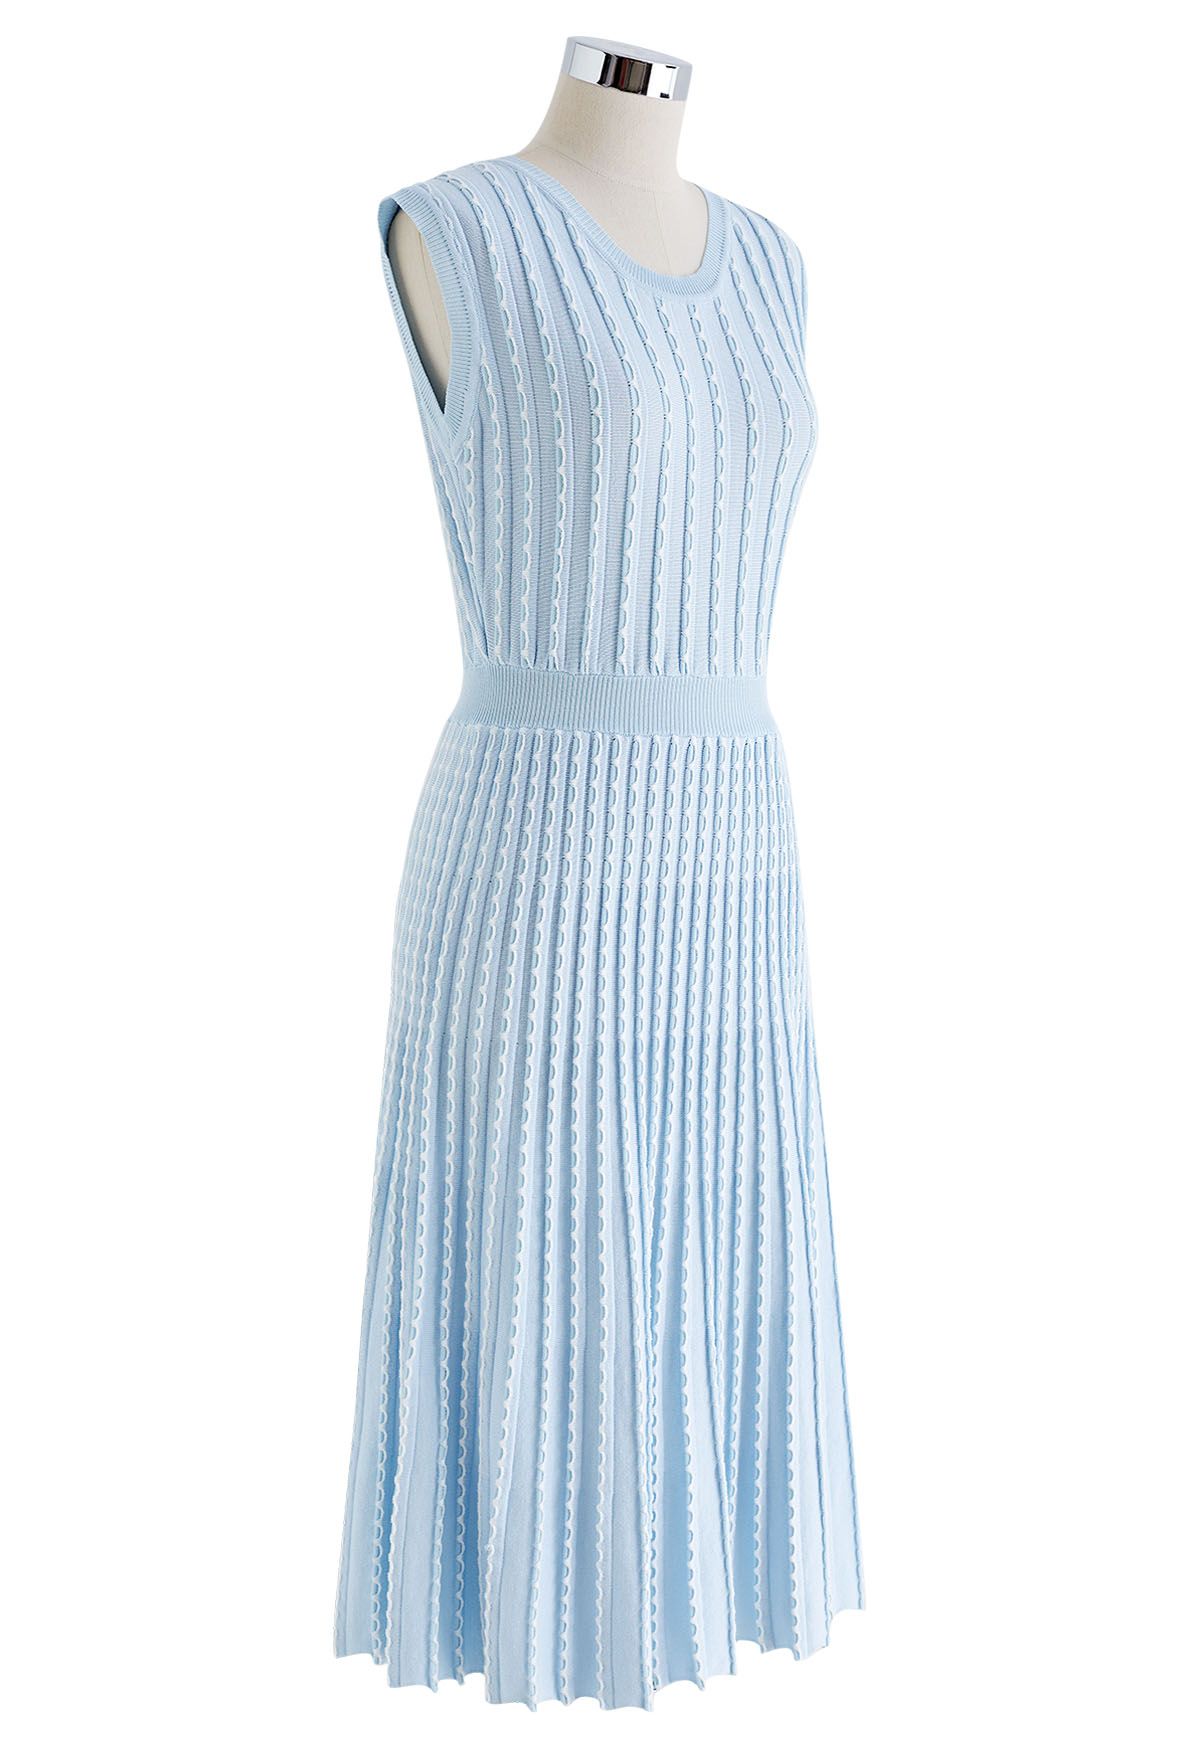 Wavy Seam Sleeveless Knit Dress in Blue